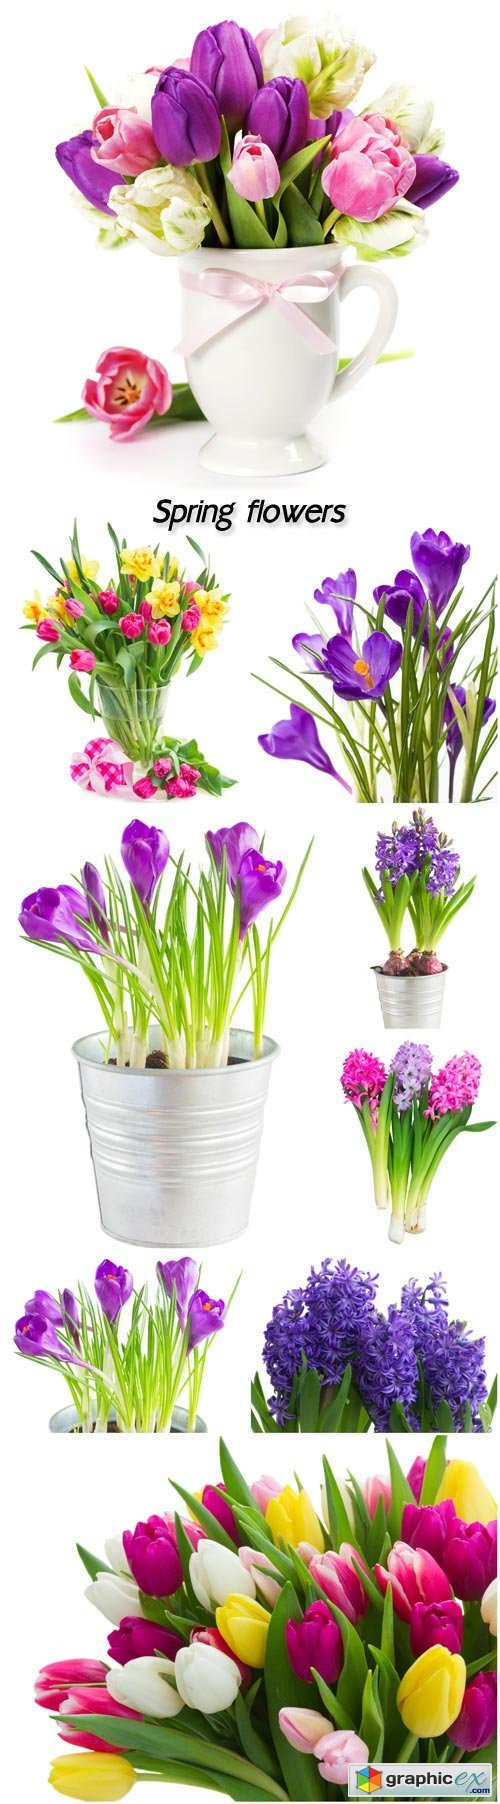 Spring flowers, hyacinths, crocuses and tulips